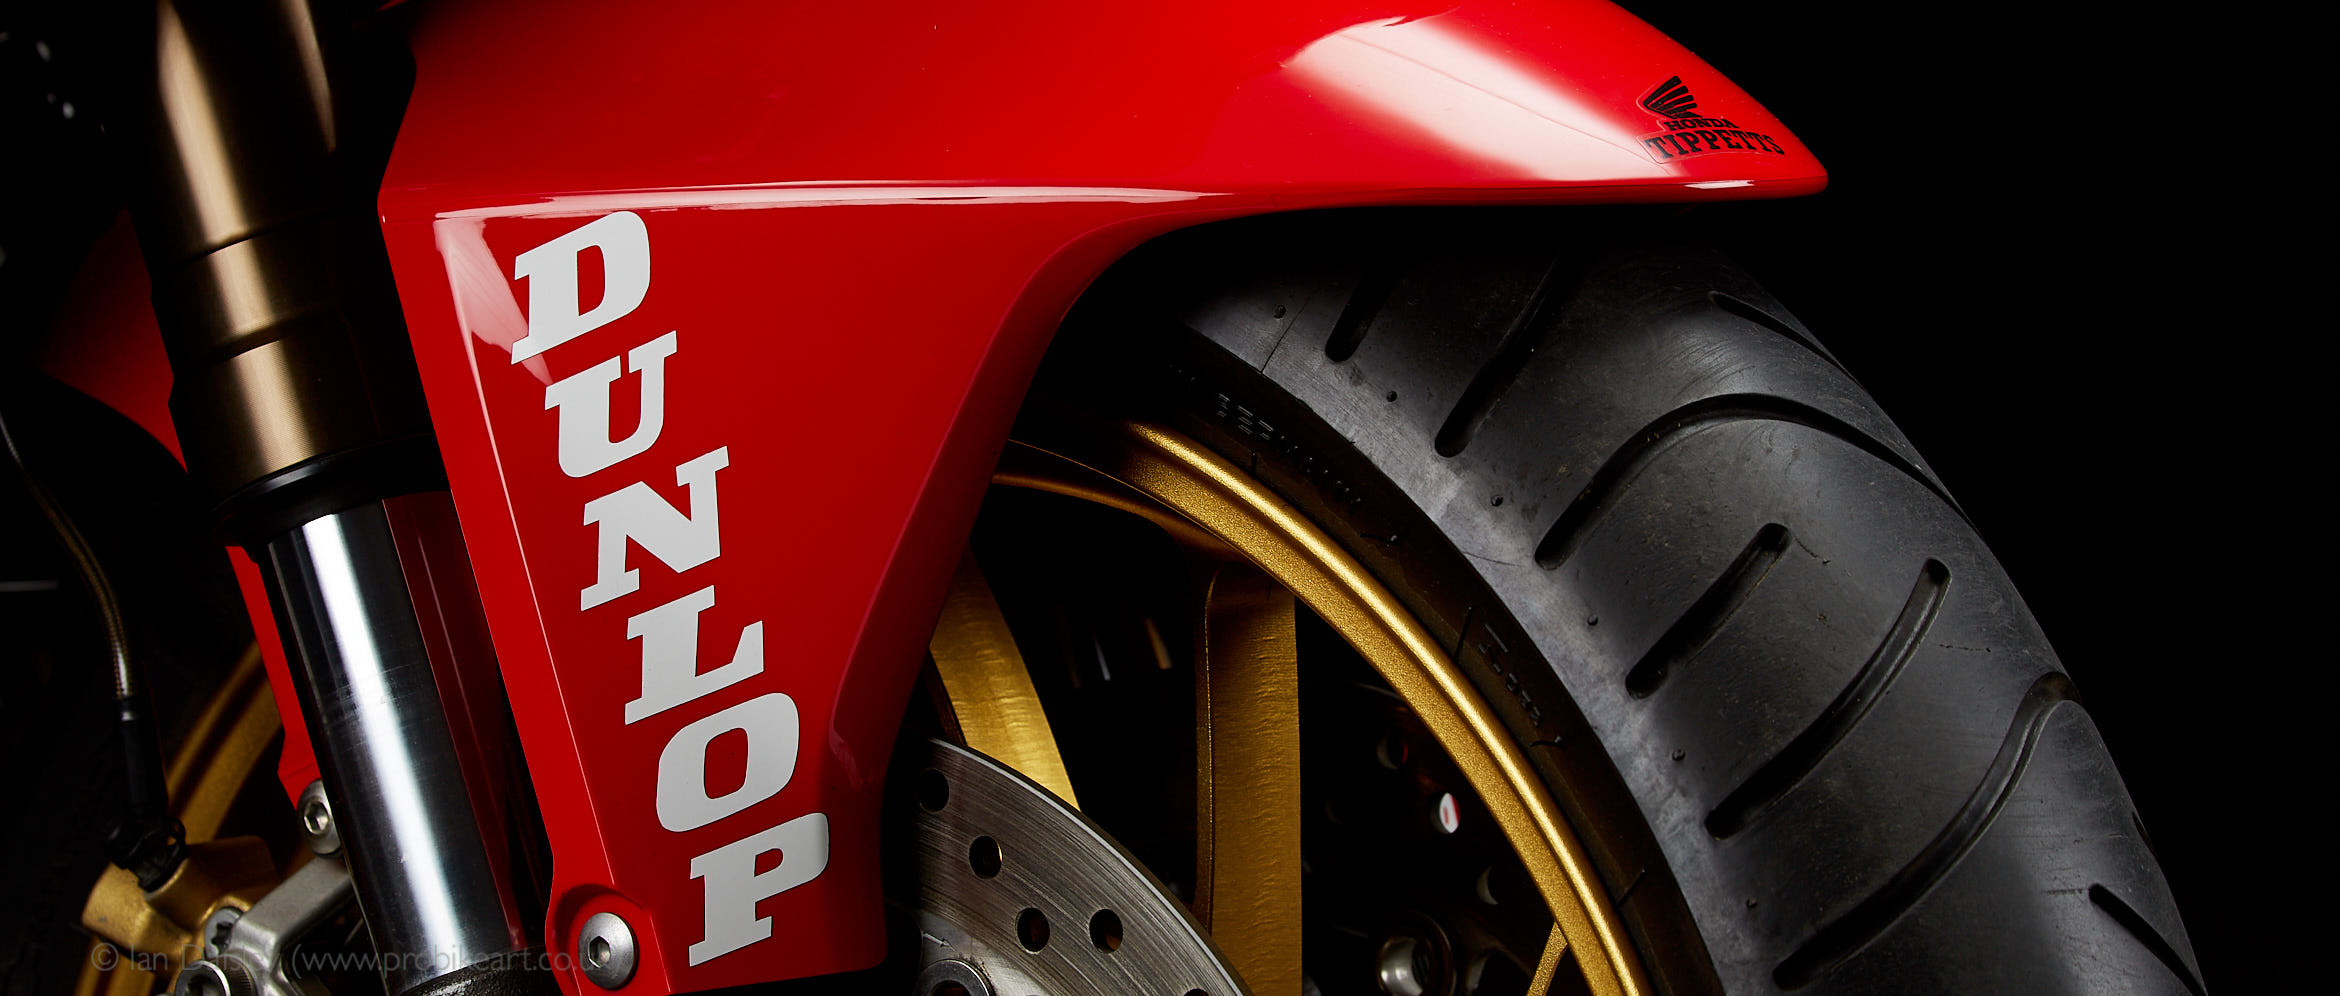 Honda SP1 Joey Dunlop Replica